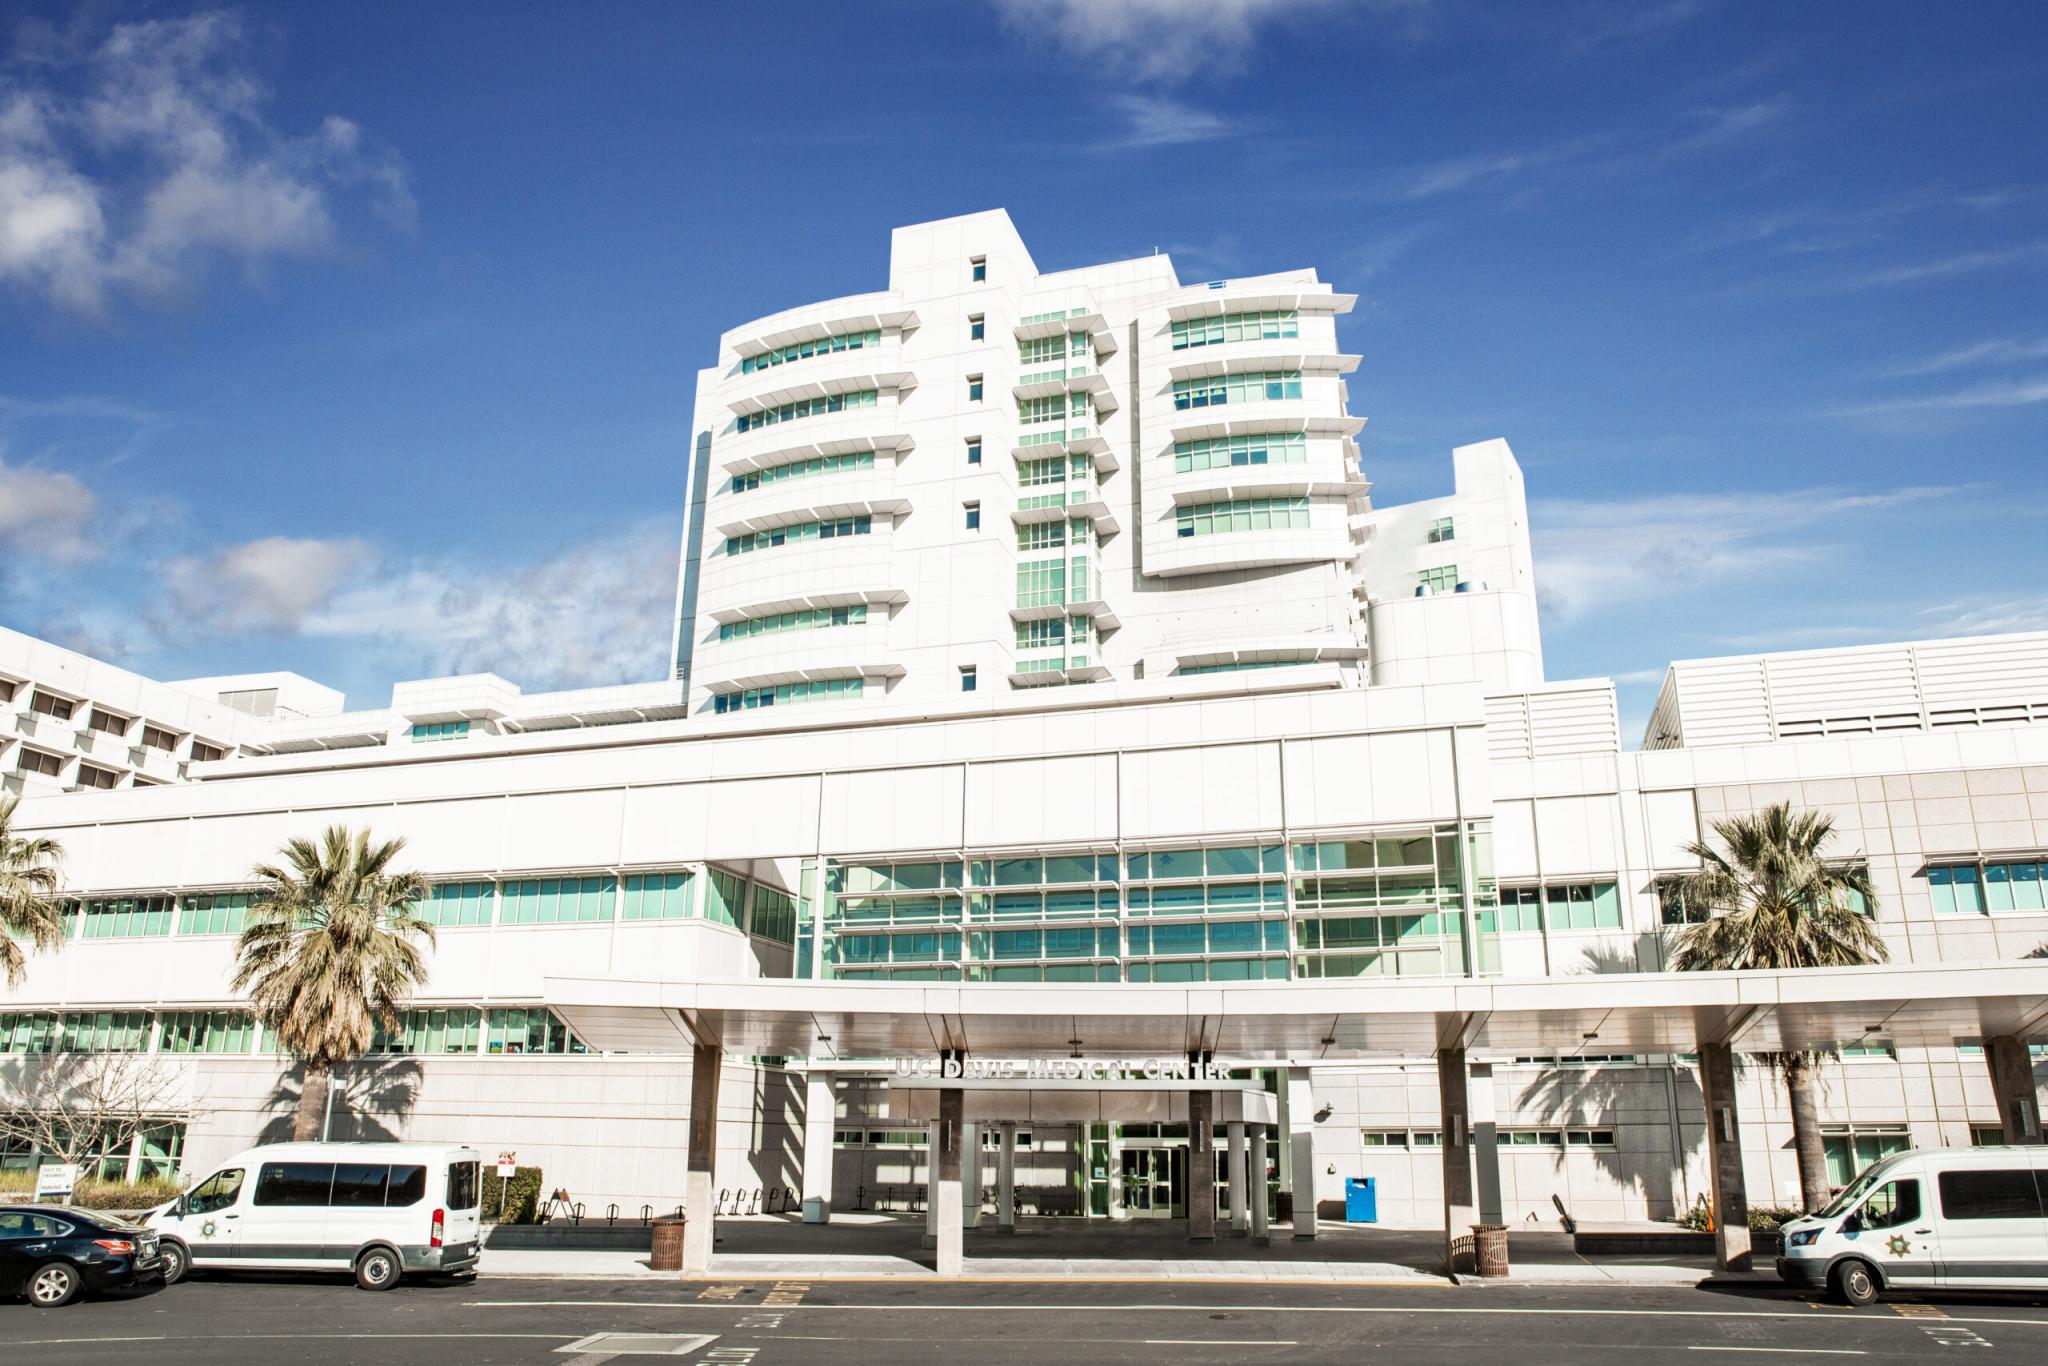 Exterior Shot of the UC Davis Medical Center Entrance